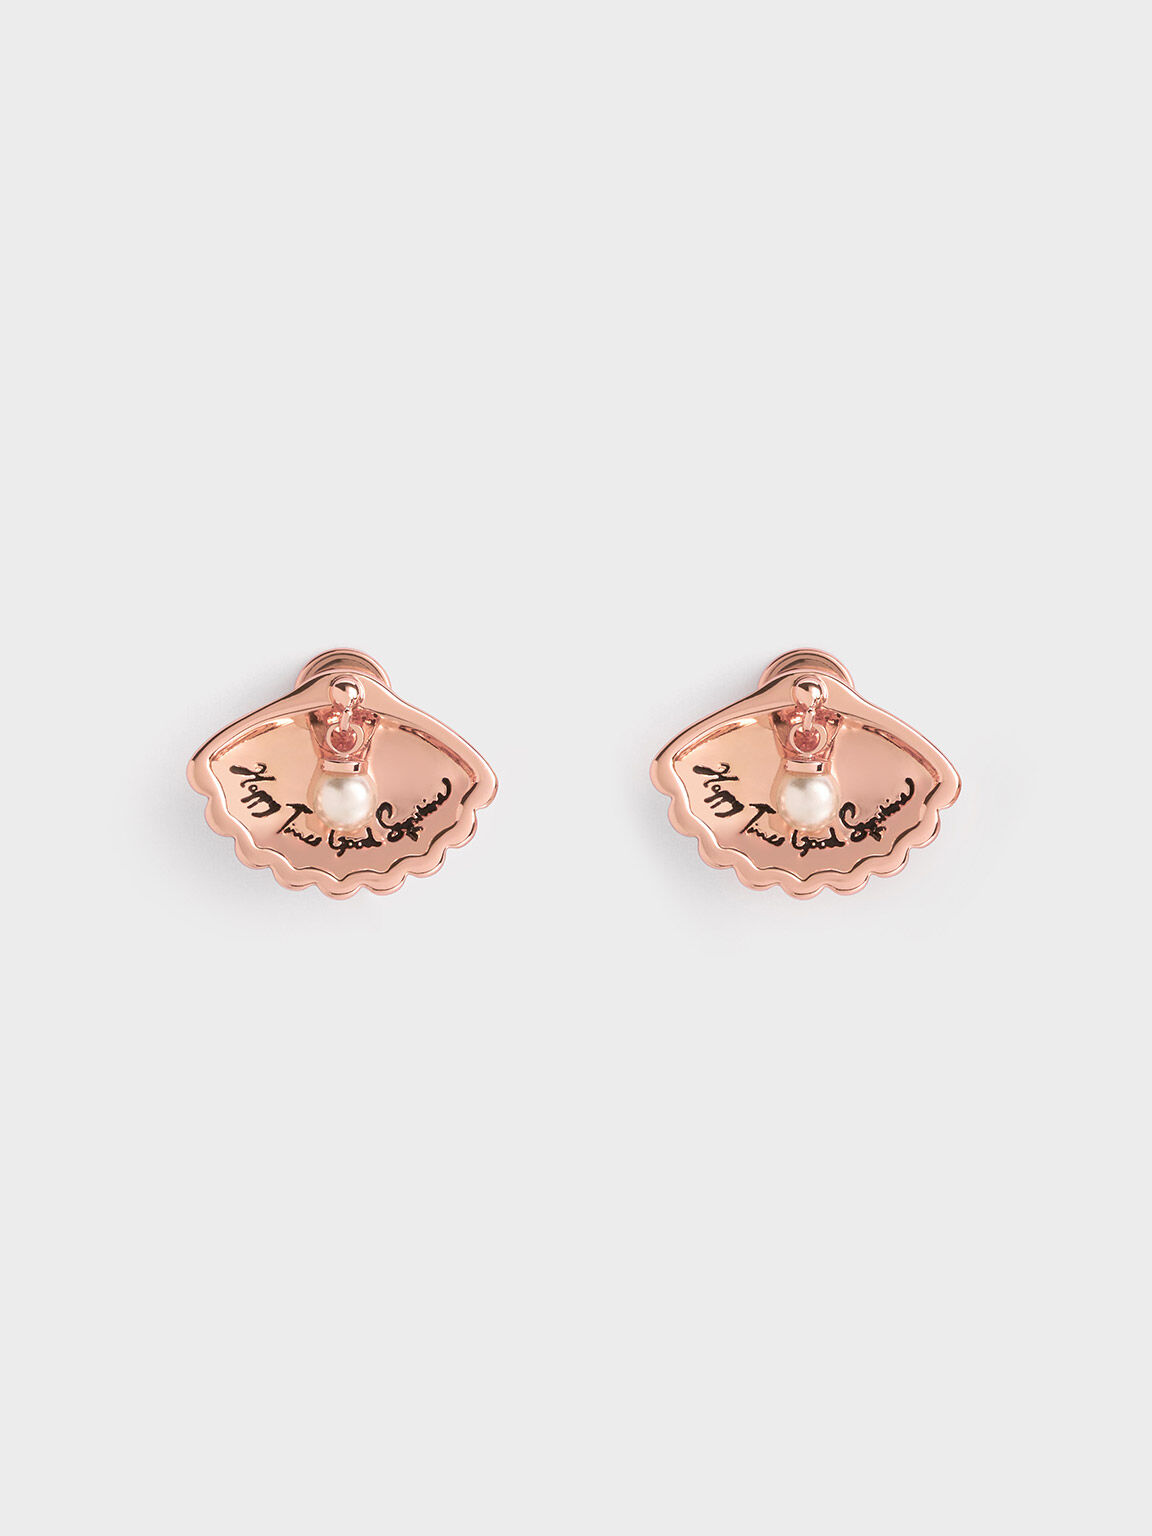 Oceana Scallop Pearl Crystal Stud Earrings, Rose Gold, hi-res